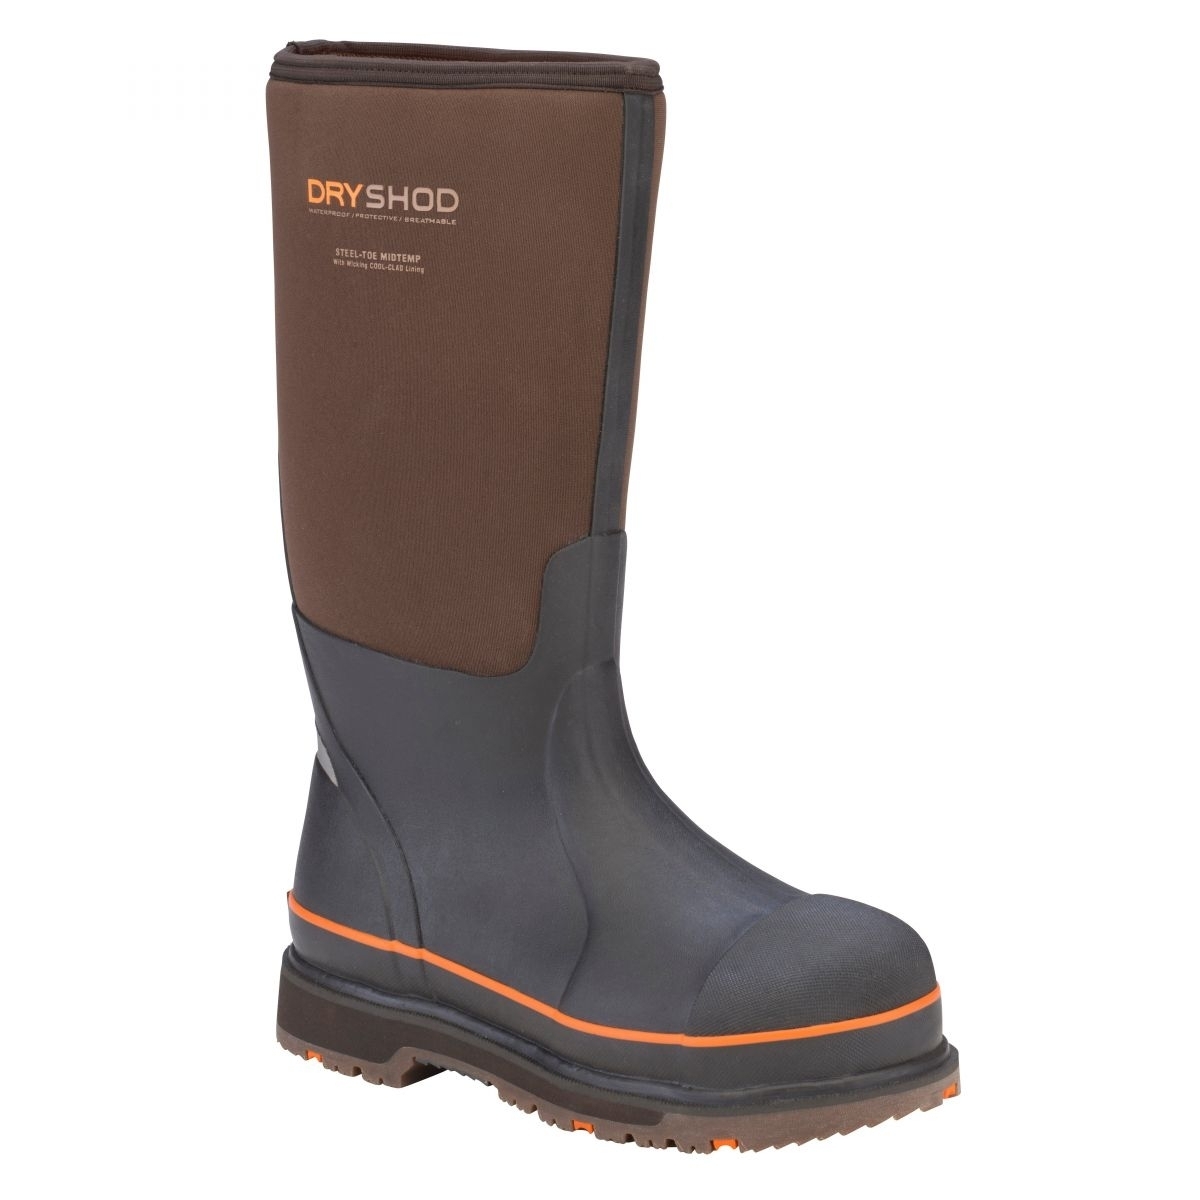 DRYSHOD WORK Men's Steel Toe WIXIT Cool-Cladâ¢ Waterproof Work Boot Brown/Orange - STT-UH-BR ONE SIZE BROWN/ORANGE - BROWN/ORANGE, 12